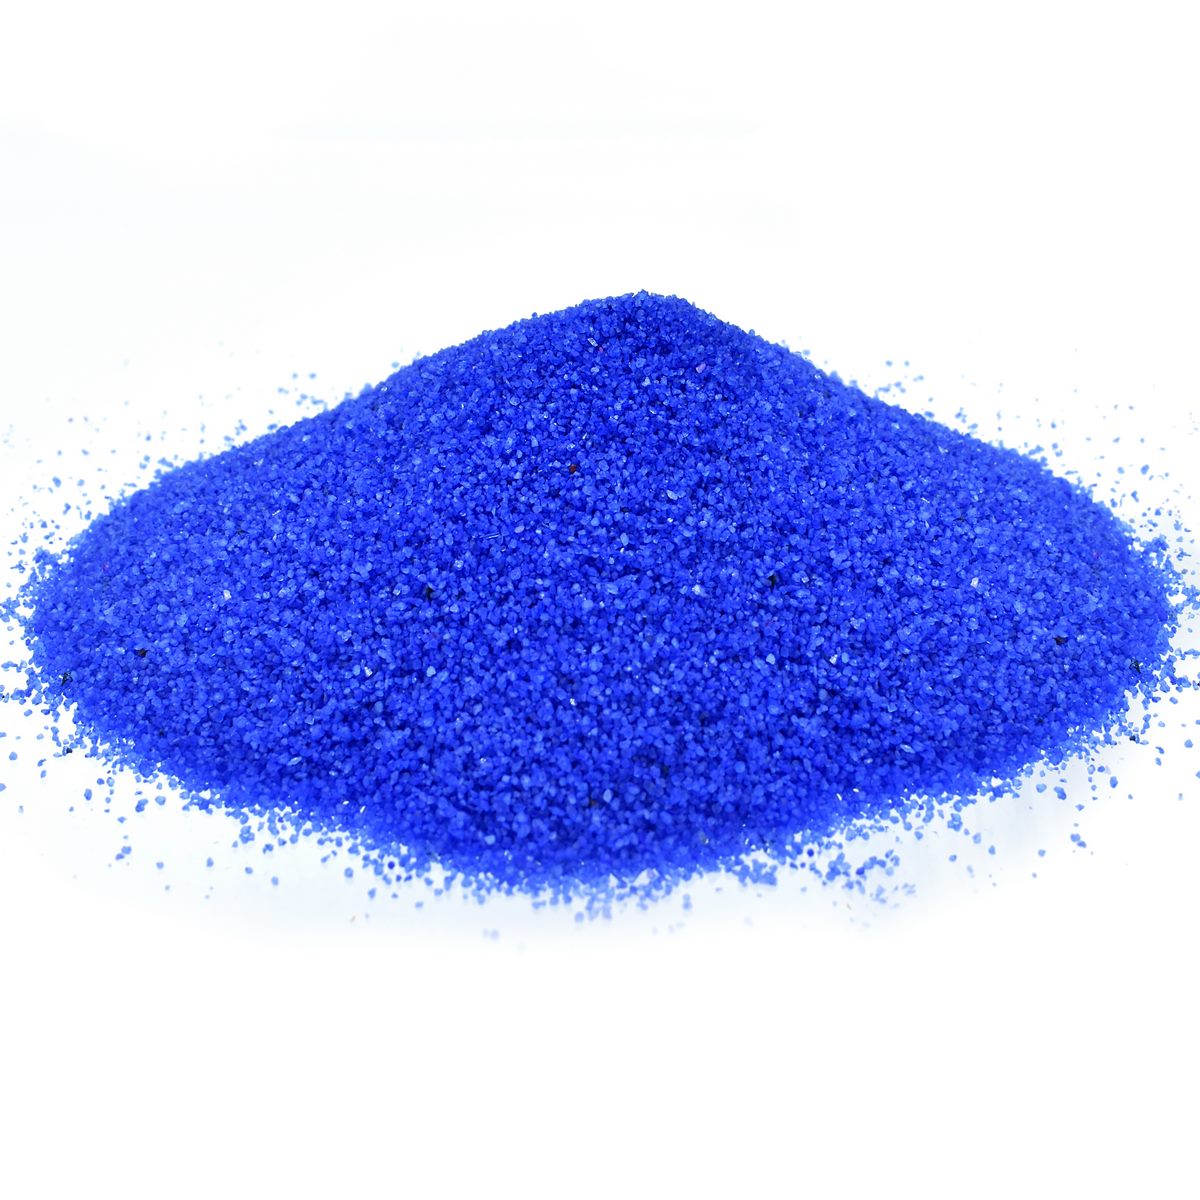 jags-mumbai Sand Jags Coloured Sand 160Gms Dark Blue No 11 - Vibrant Craft Sand for Artistic Creations